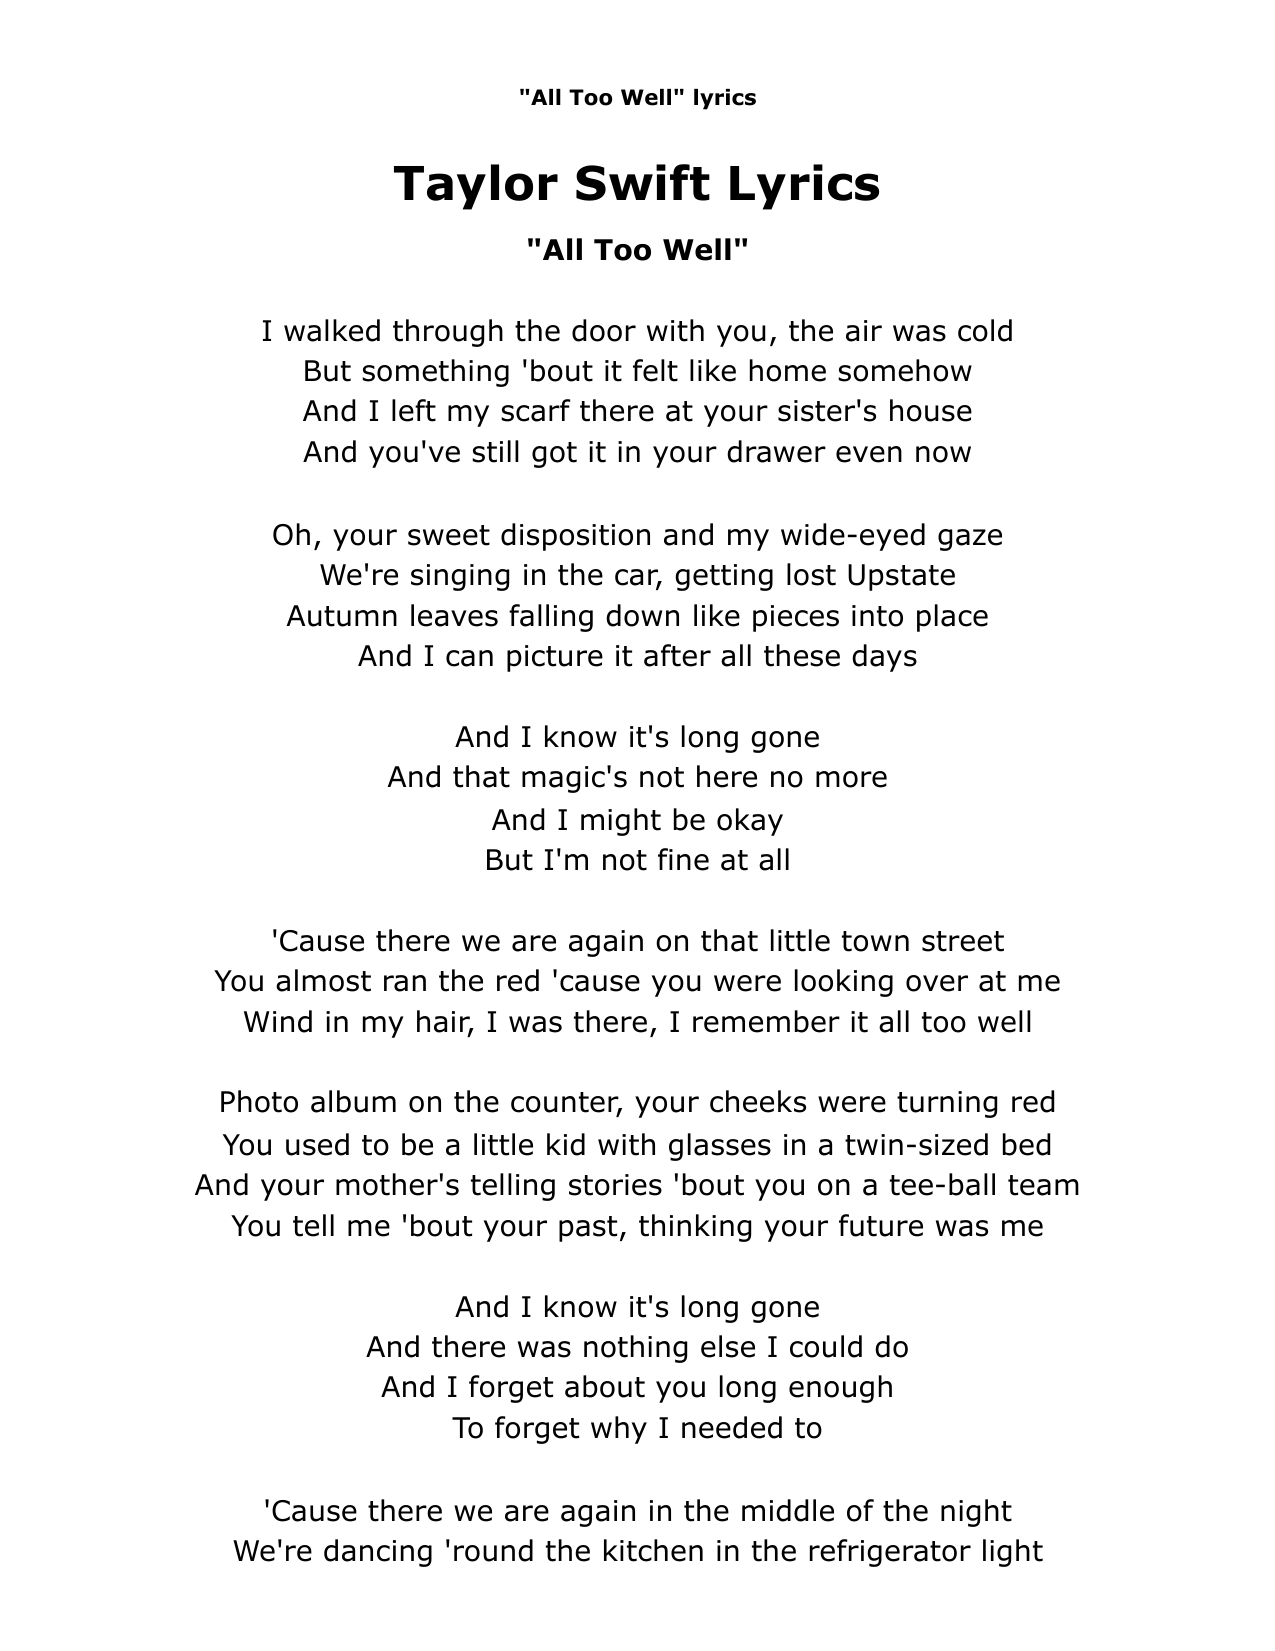 taylor swift lyrics all too well